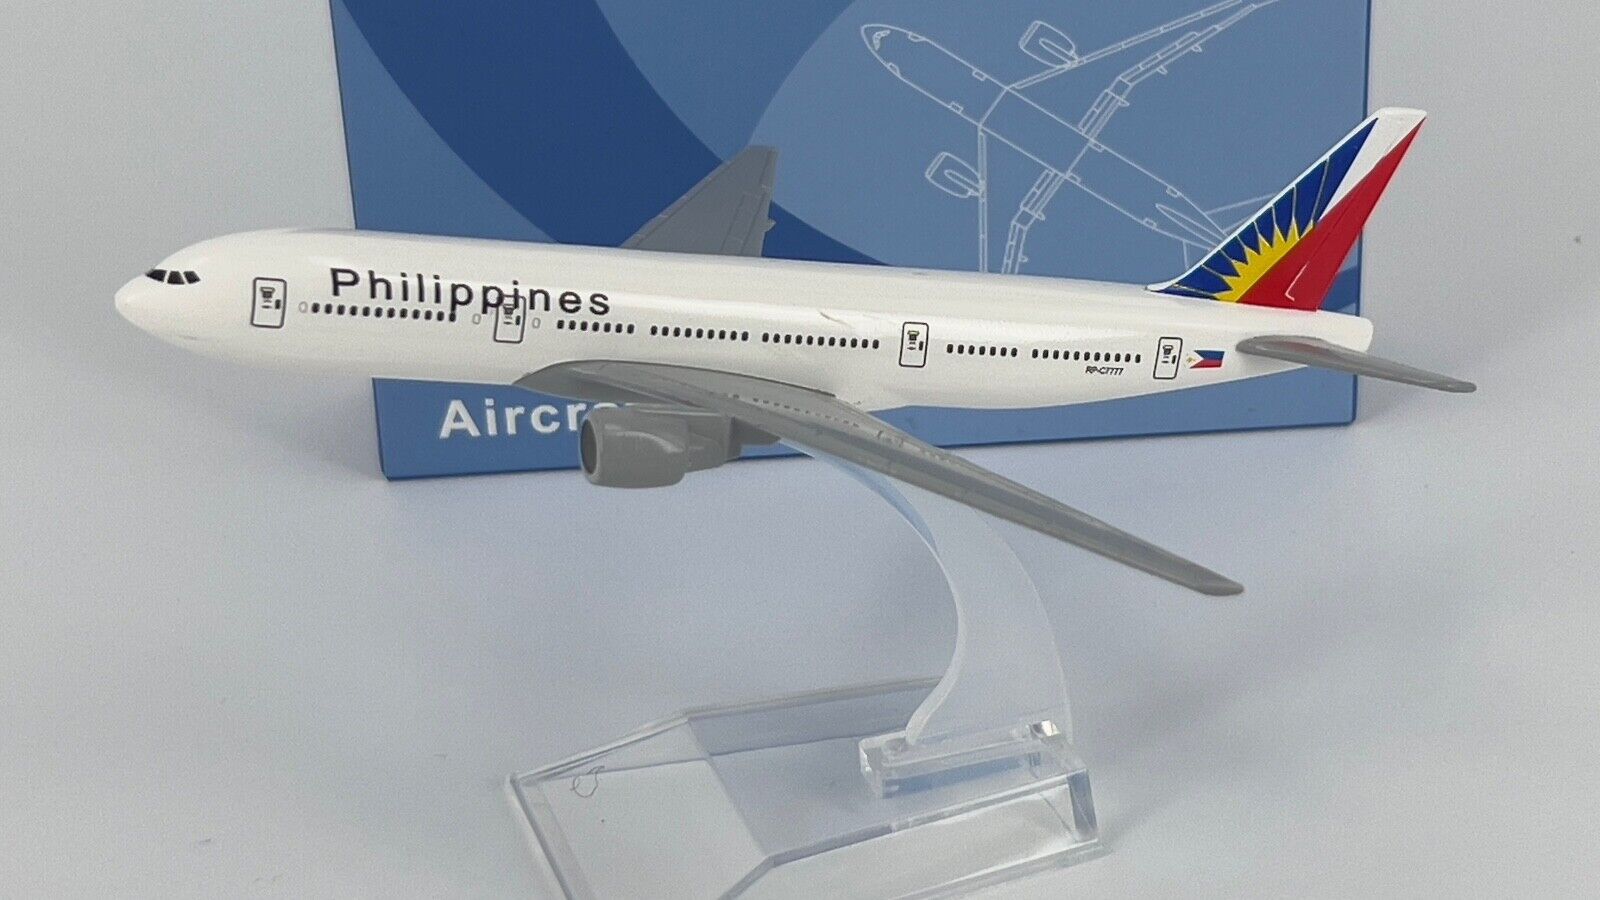 Philippines Air 777 Air Model Plane Scale 1:400 Apx 14cm Long Diecast Metal